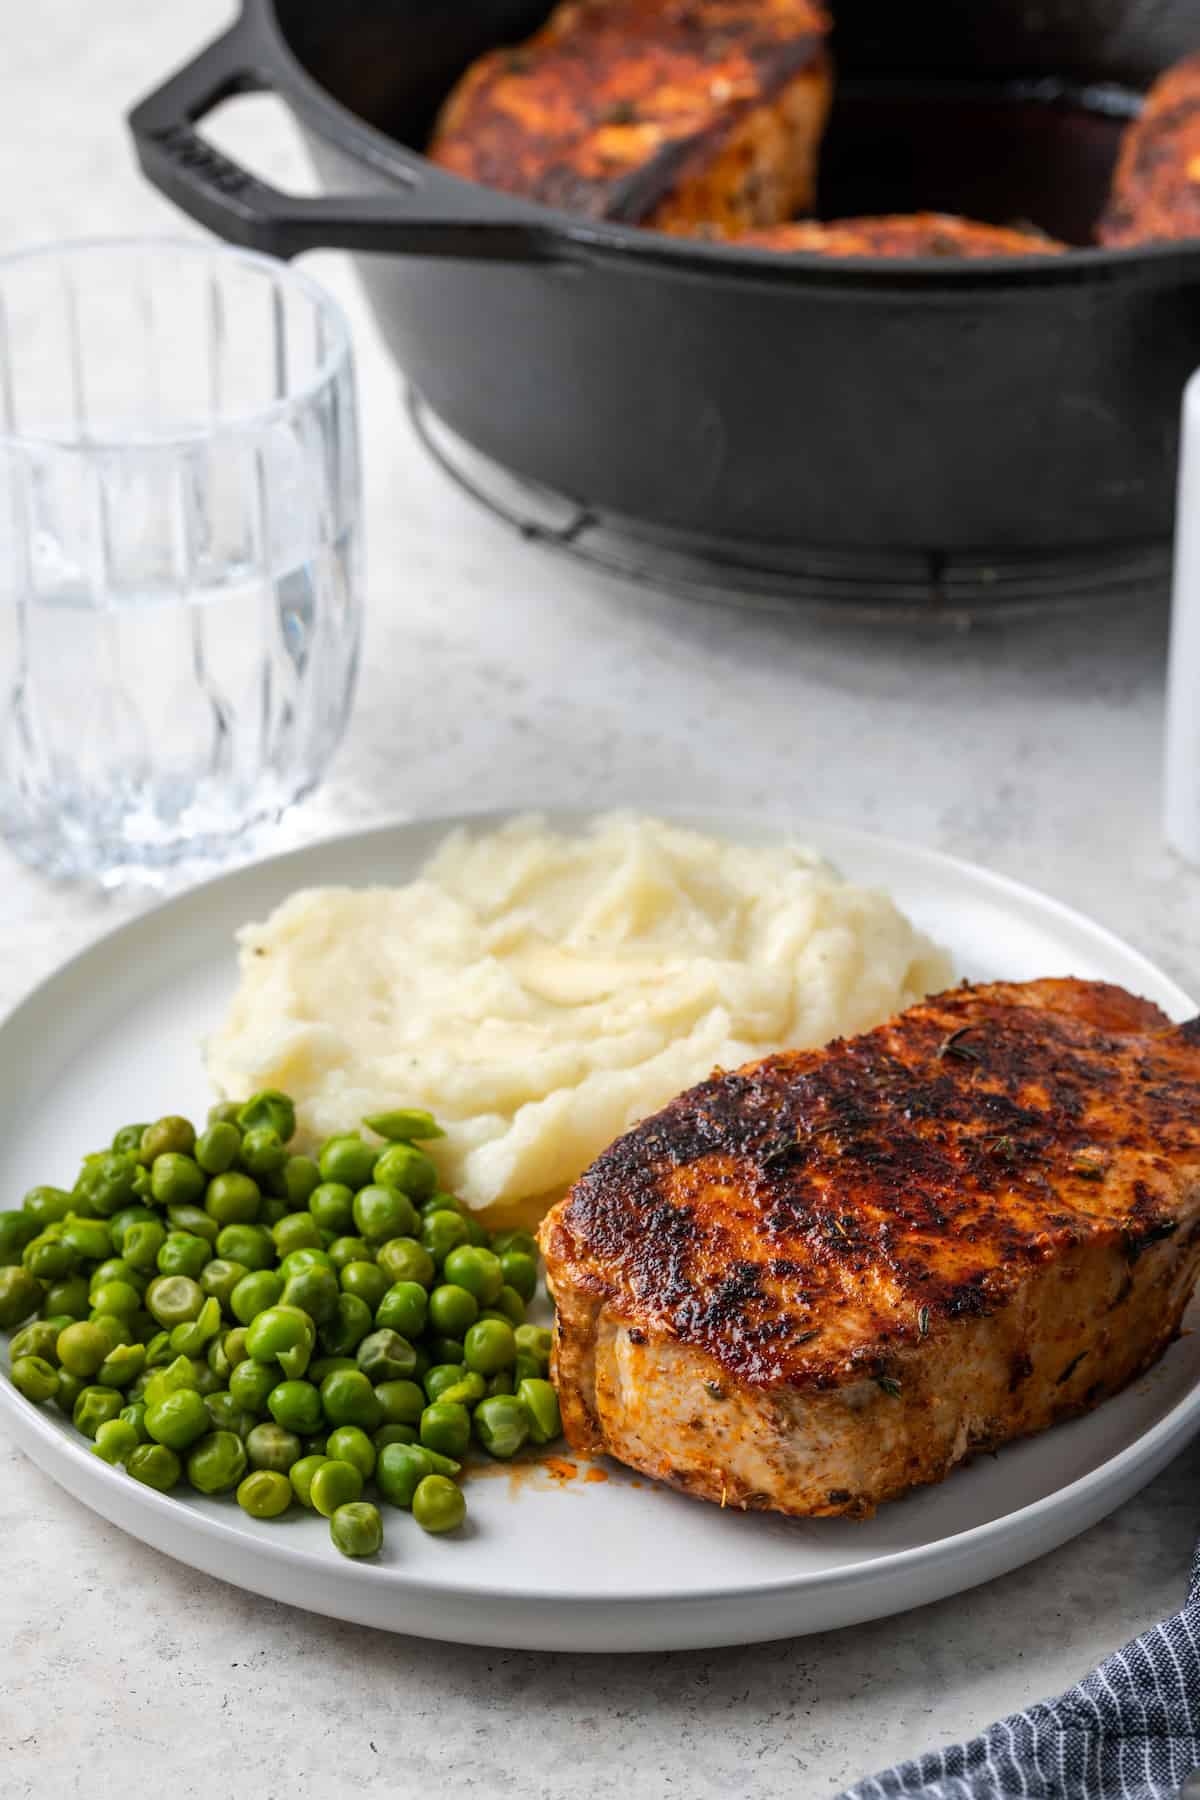 A dinner plate with a seared and seasoned pork chop alongside peas and mashed potatoes.